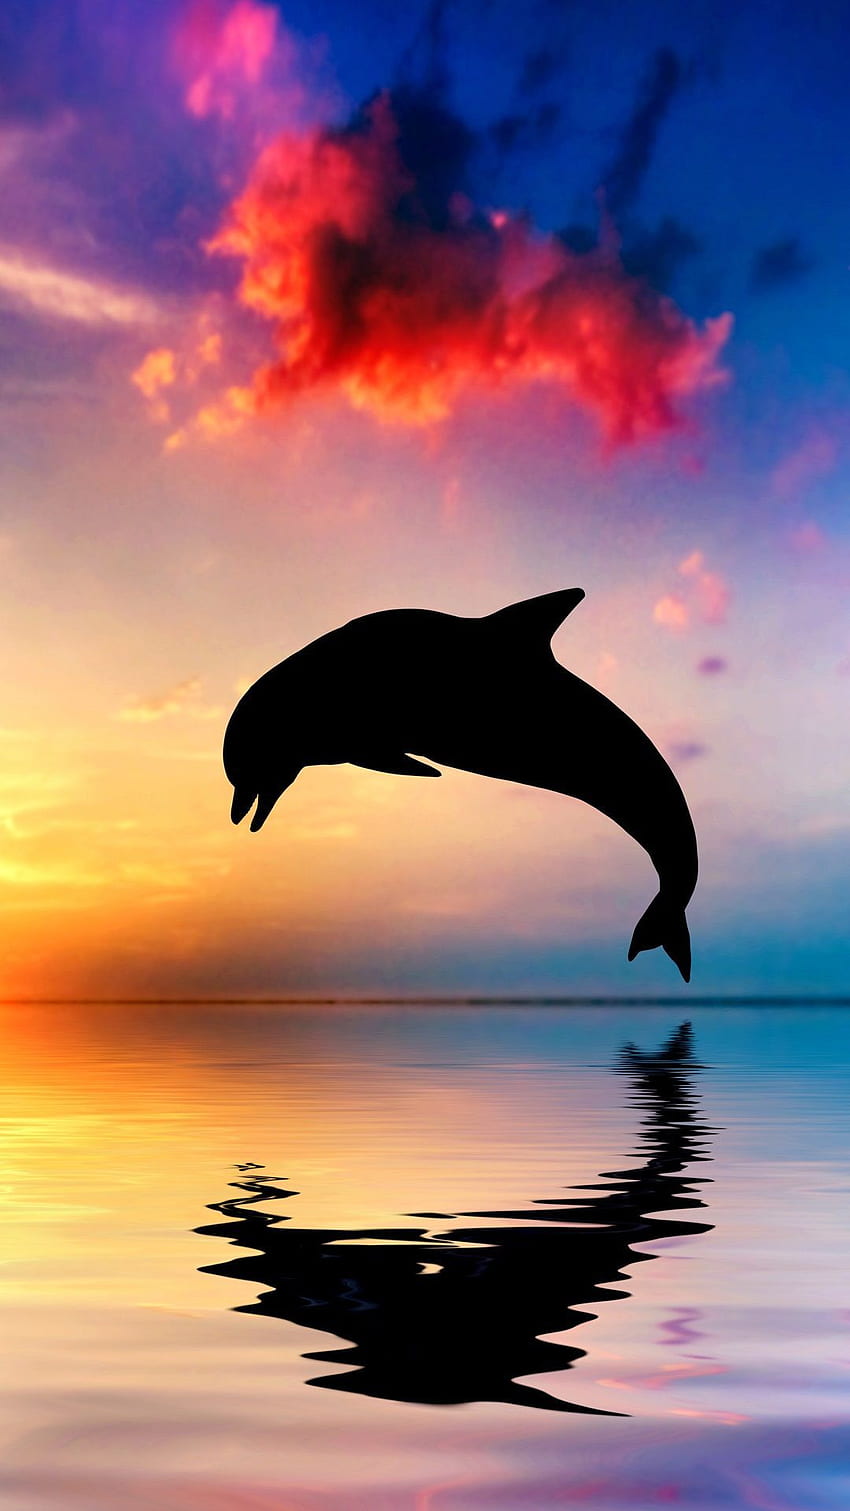 Dolphins Live Wallpaper Apk Download for Android- Latest version 2.0-  com.successcreativestudio.dolphinslivewallpaper